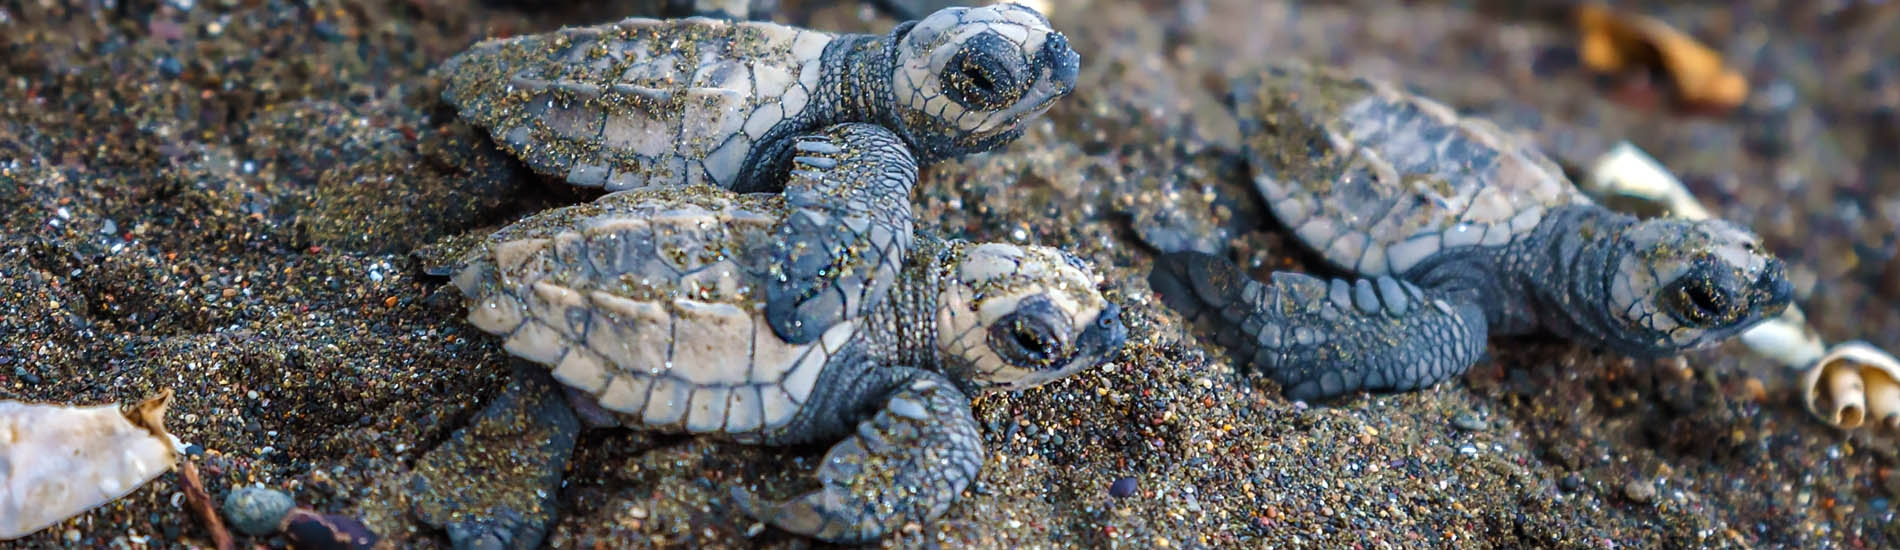 Tortuguero National Park - baby turtles